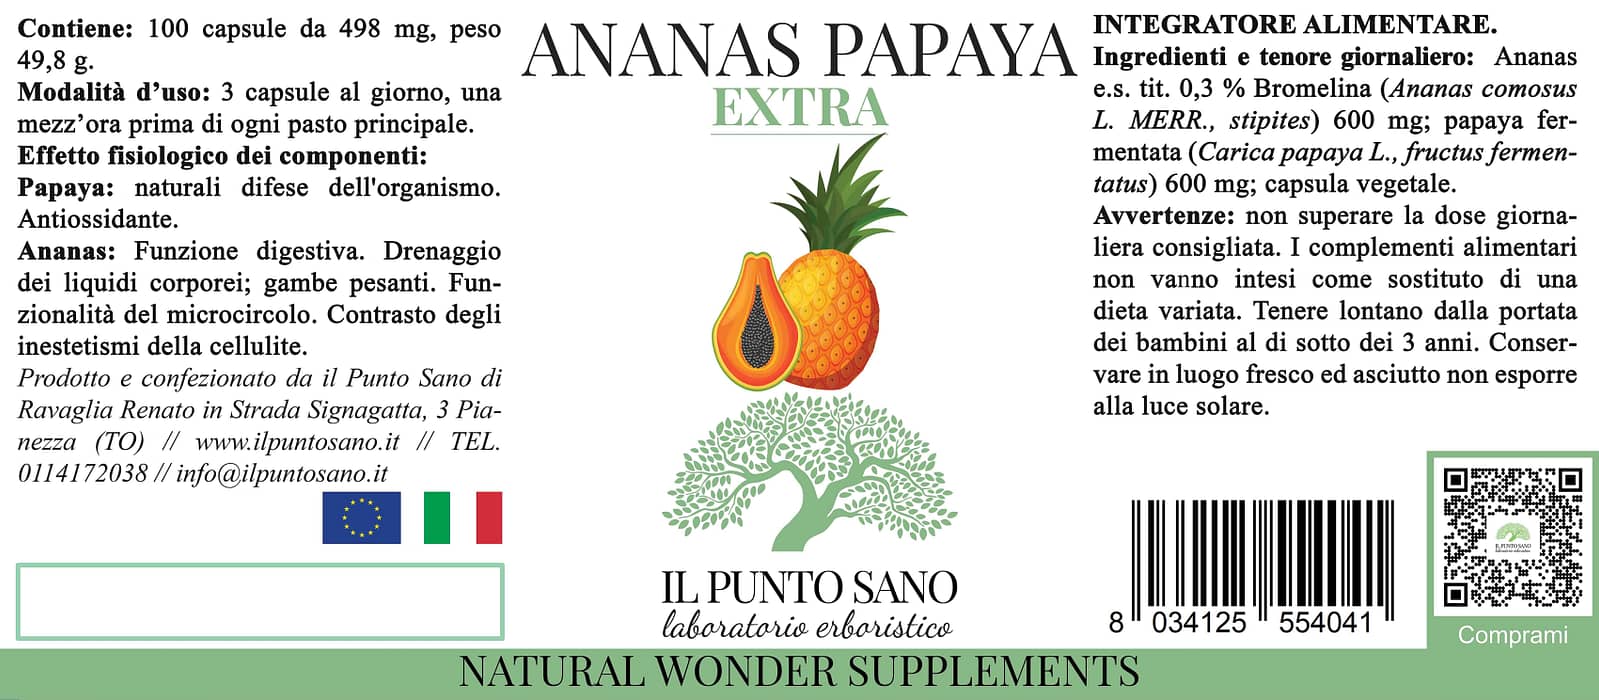 Papaya fermentata e ananas azione antiinfiammatoria e digestiva per stomaco e intestino